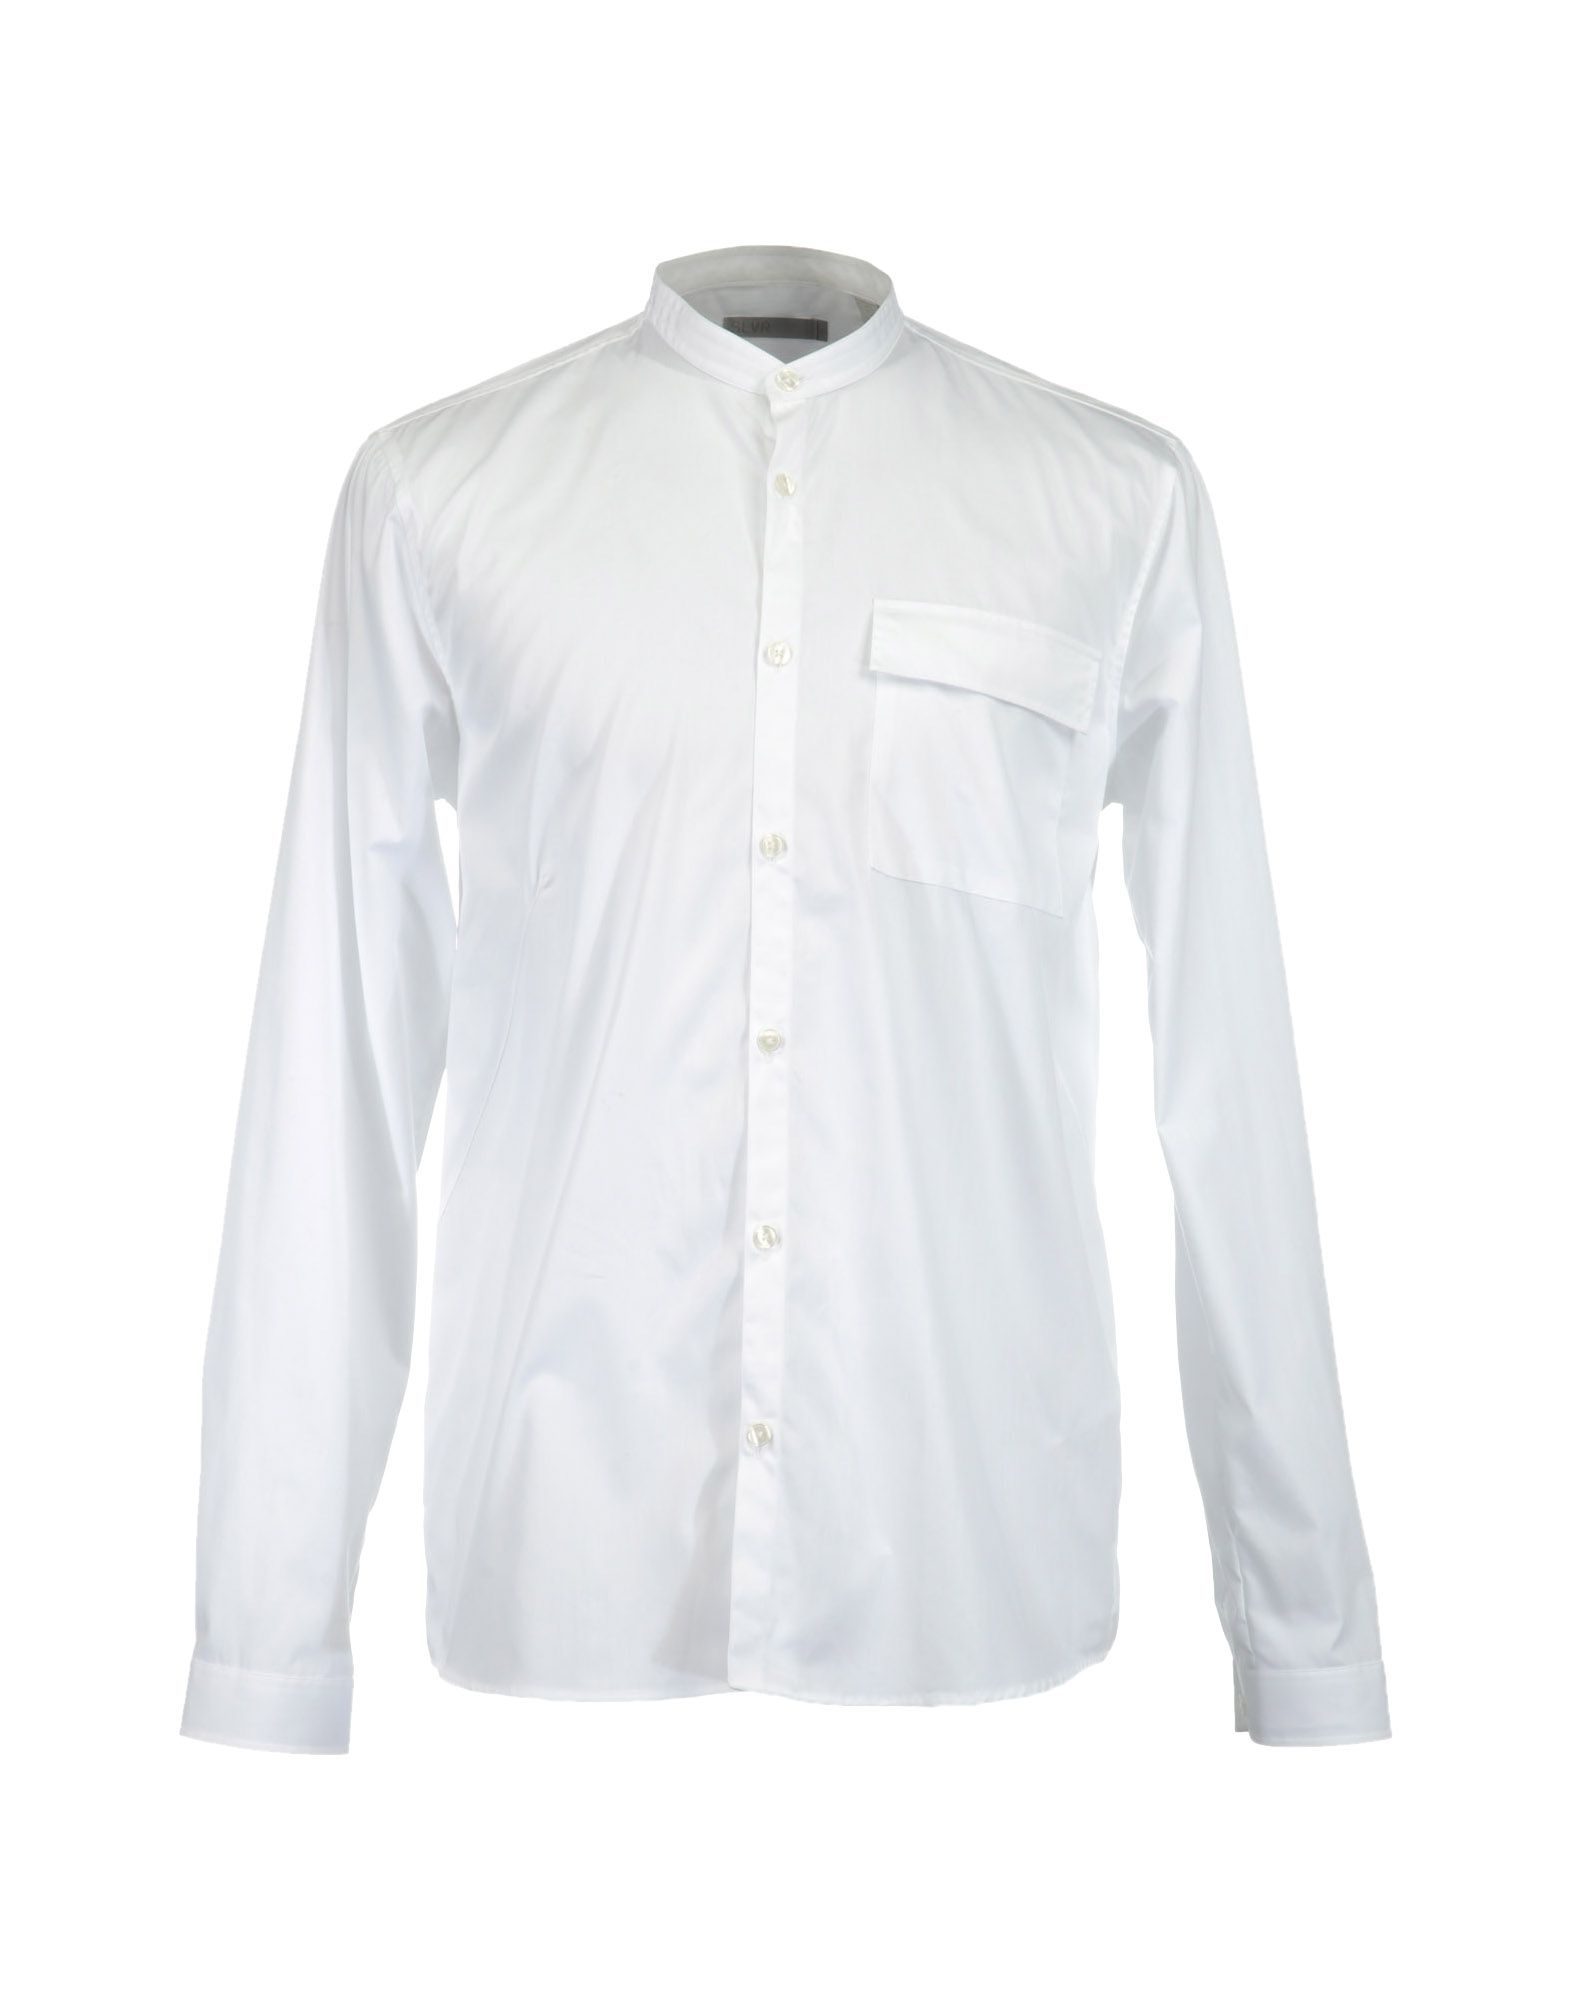 Foto adidas slvr camisas de manga larga Hombre Blanco foto 574790